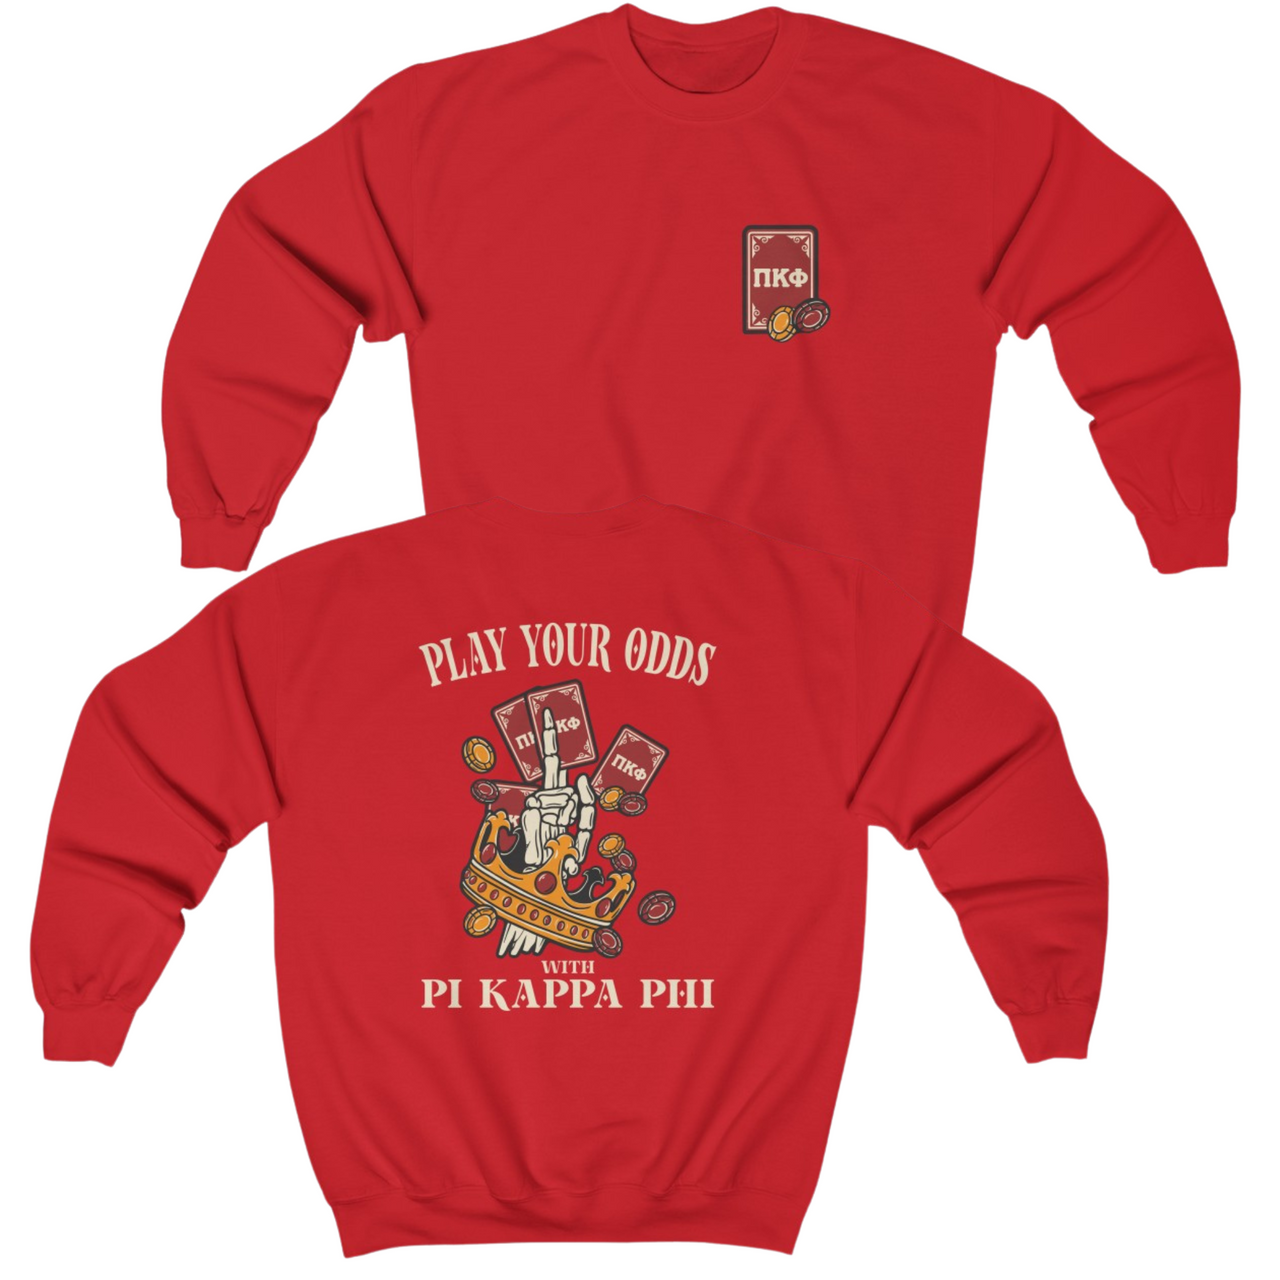 Red Pi Kappa Phi Graphic Crewneck Sweatshirt | Play Your Odds | Pi Kappa Phi Apparel and Merchandise